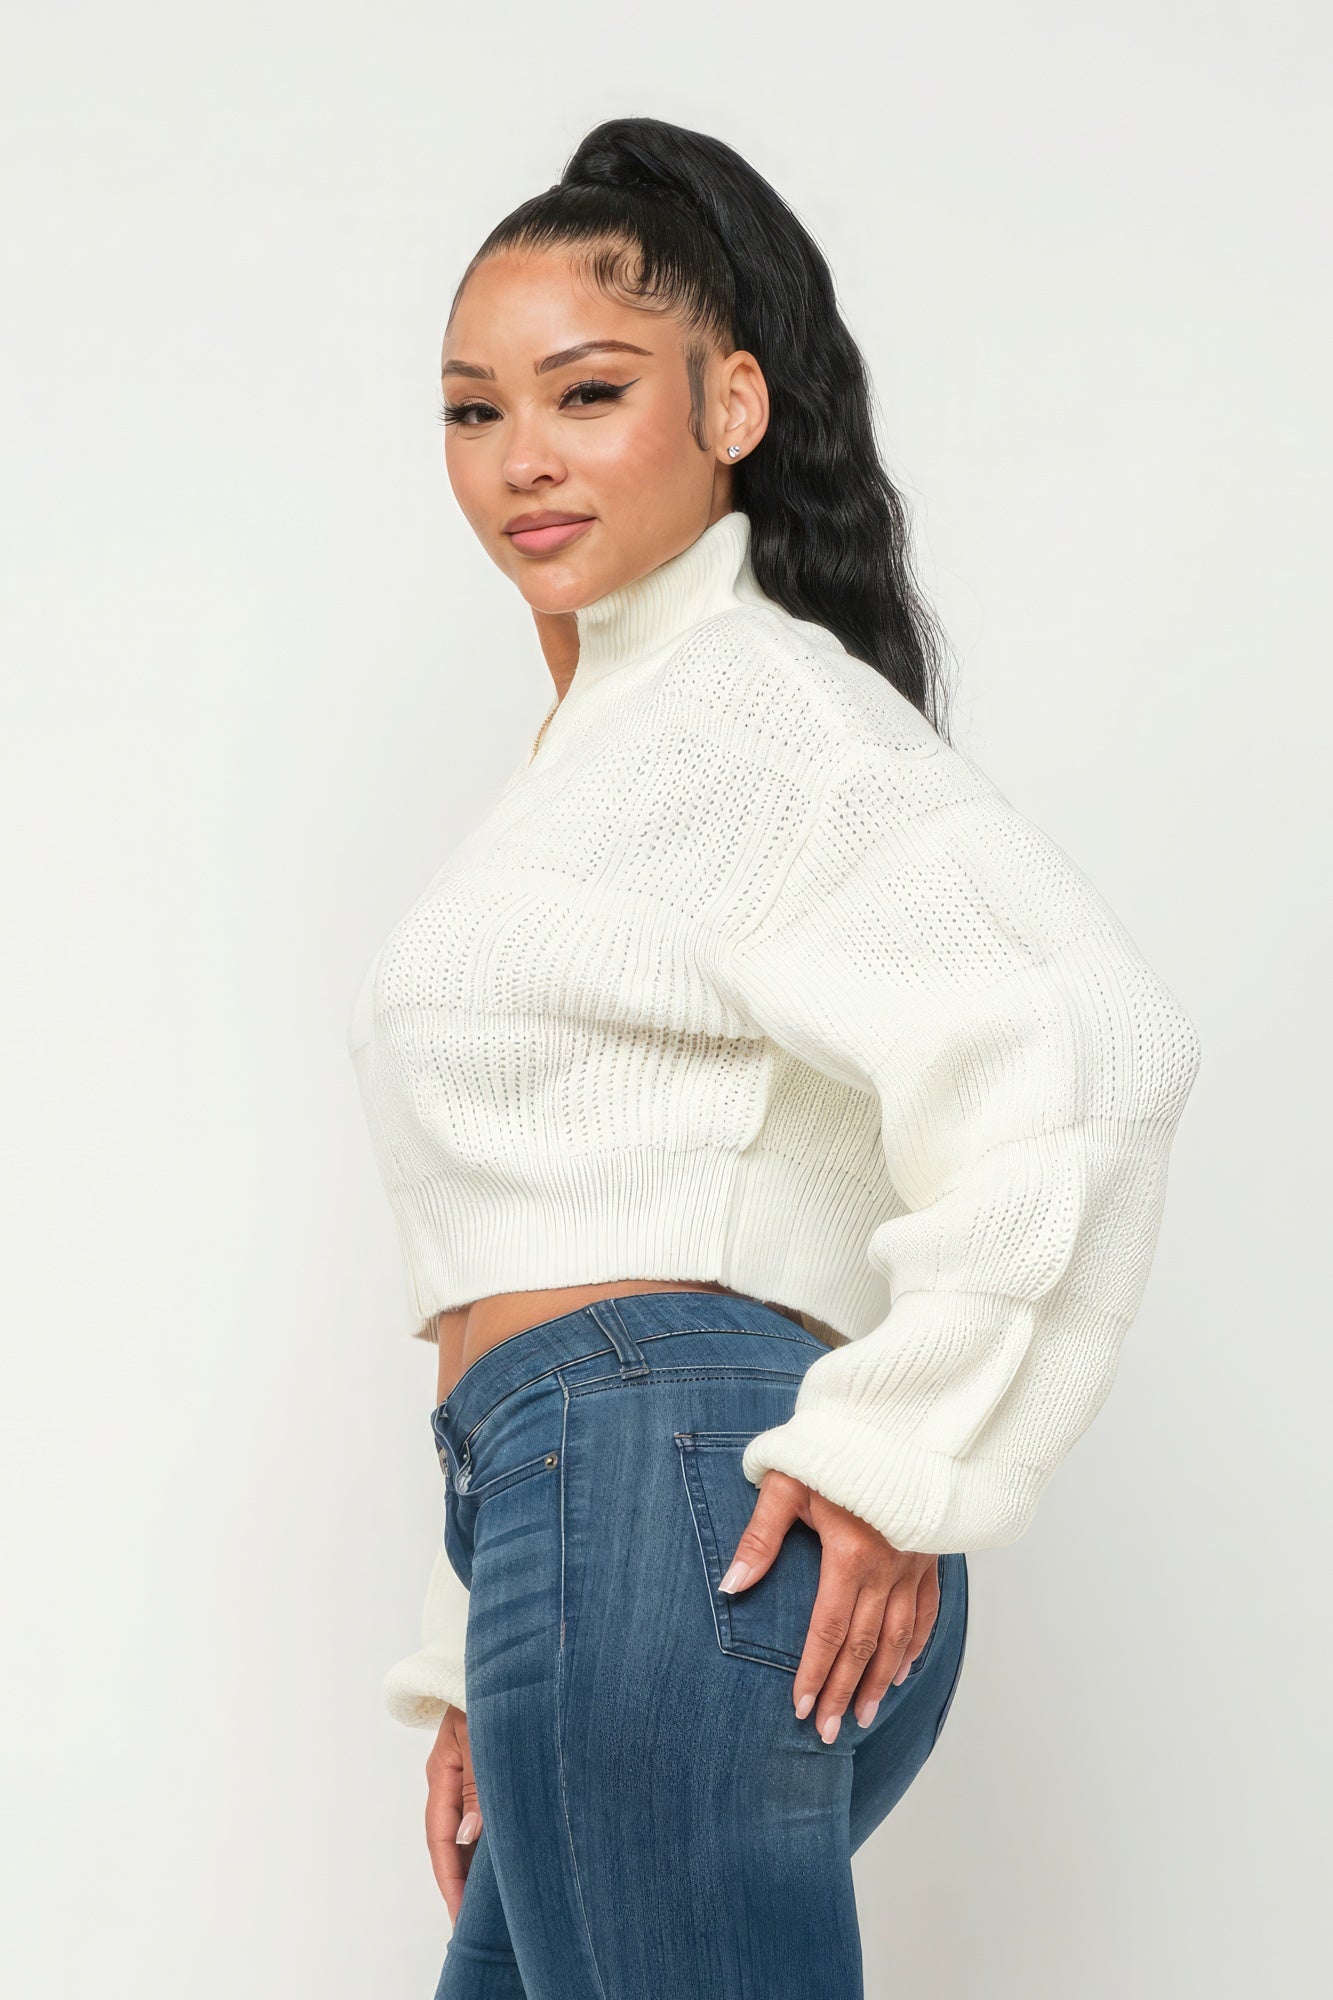 Women's Sweater Top W/ Front Zipper